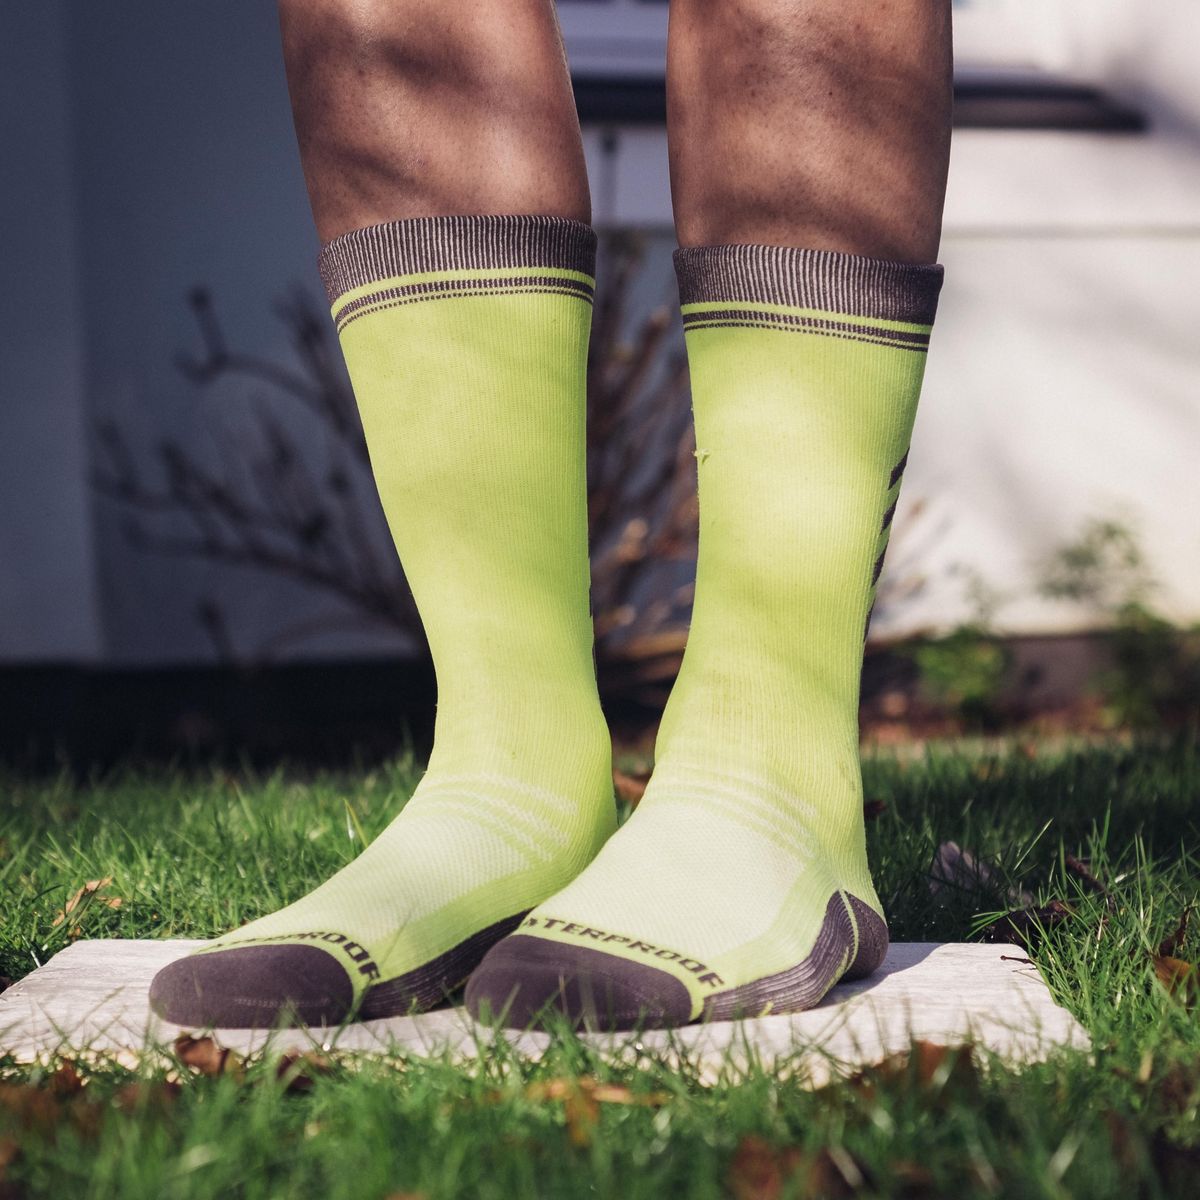 Best winter cycling socks: Warm feet are happy feet | Cyclingnews